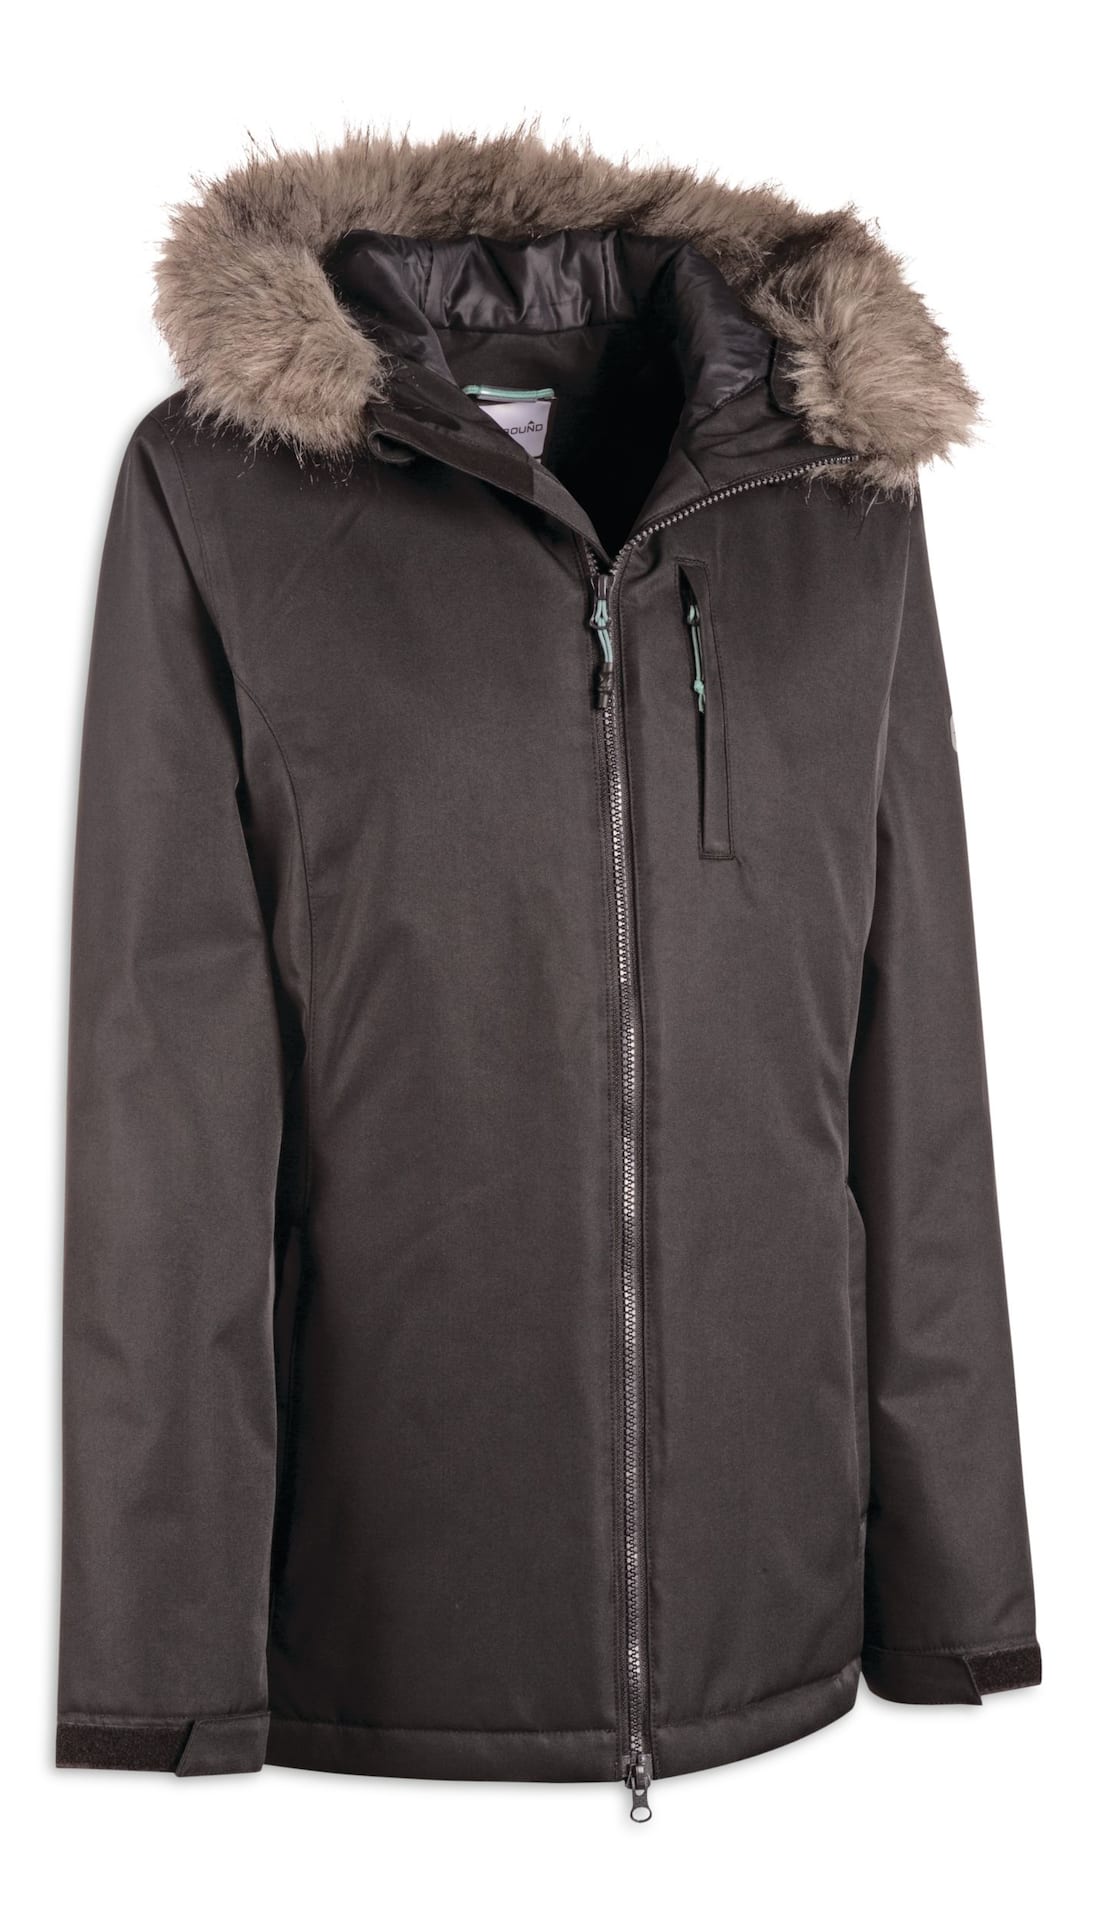 Shop Winter Jackets for Women in Canada